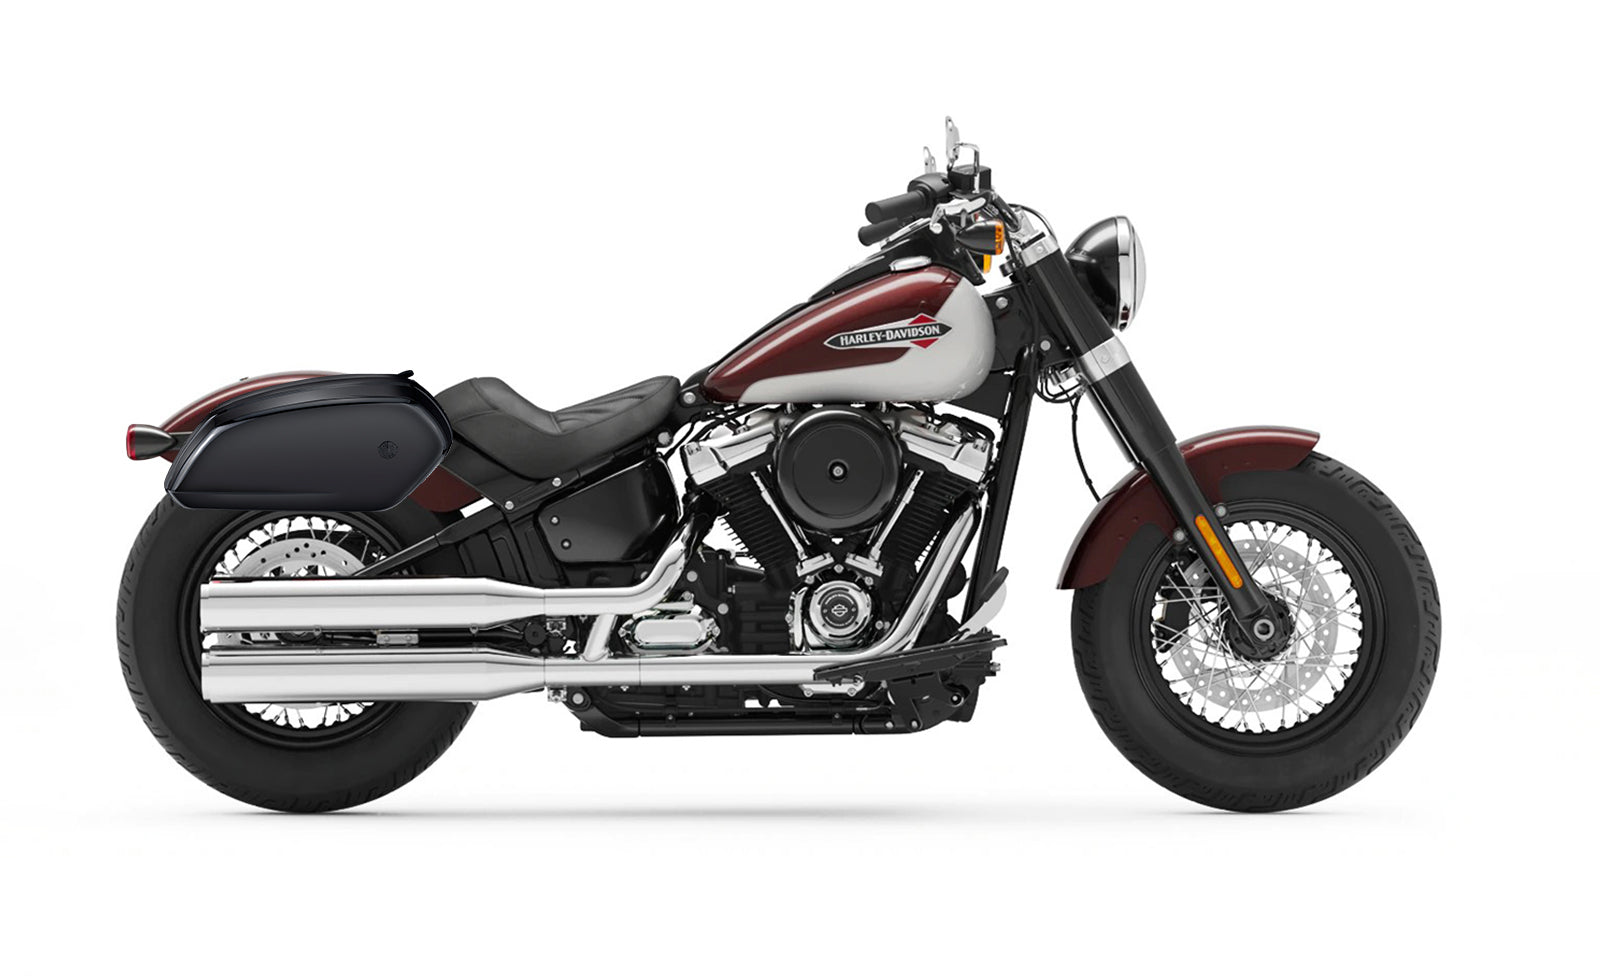 26L - Viper Large Harley Softail Slim FLSL Painted Hard Saddlebags on Bike Photo @expand